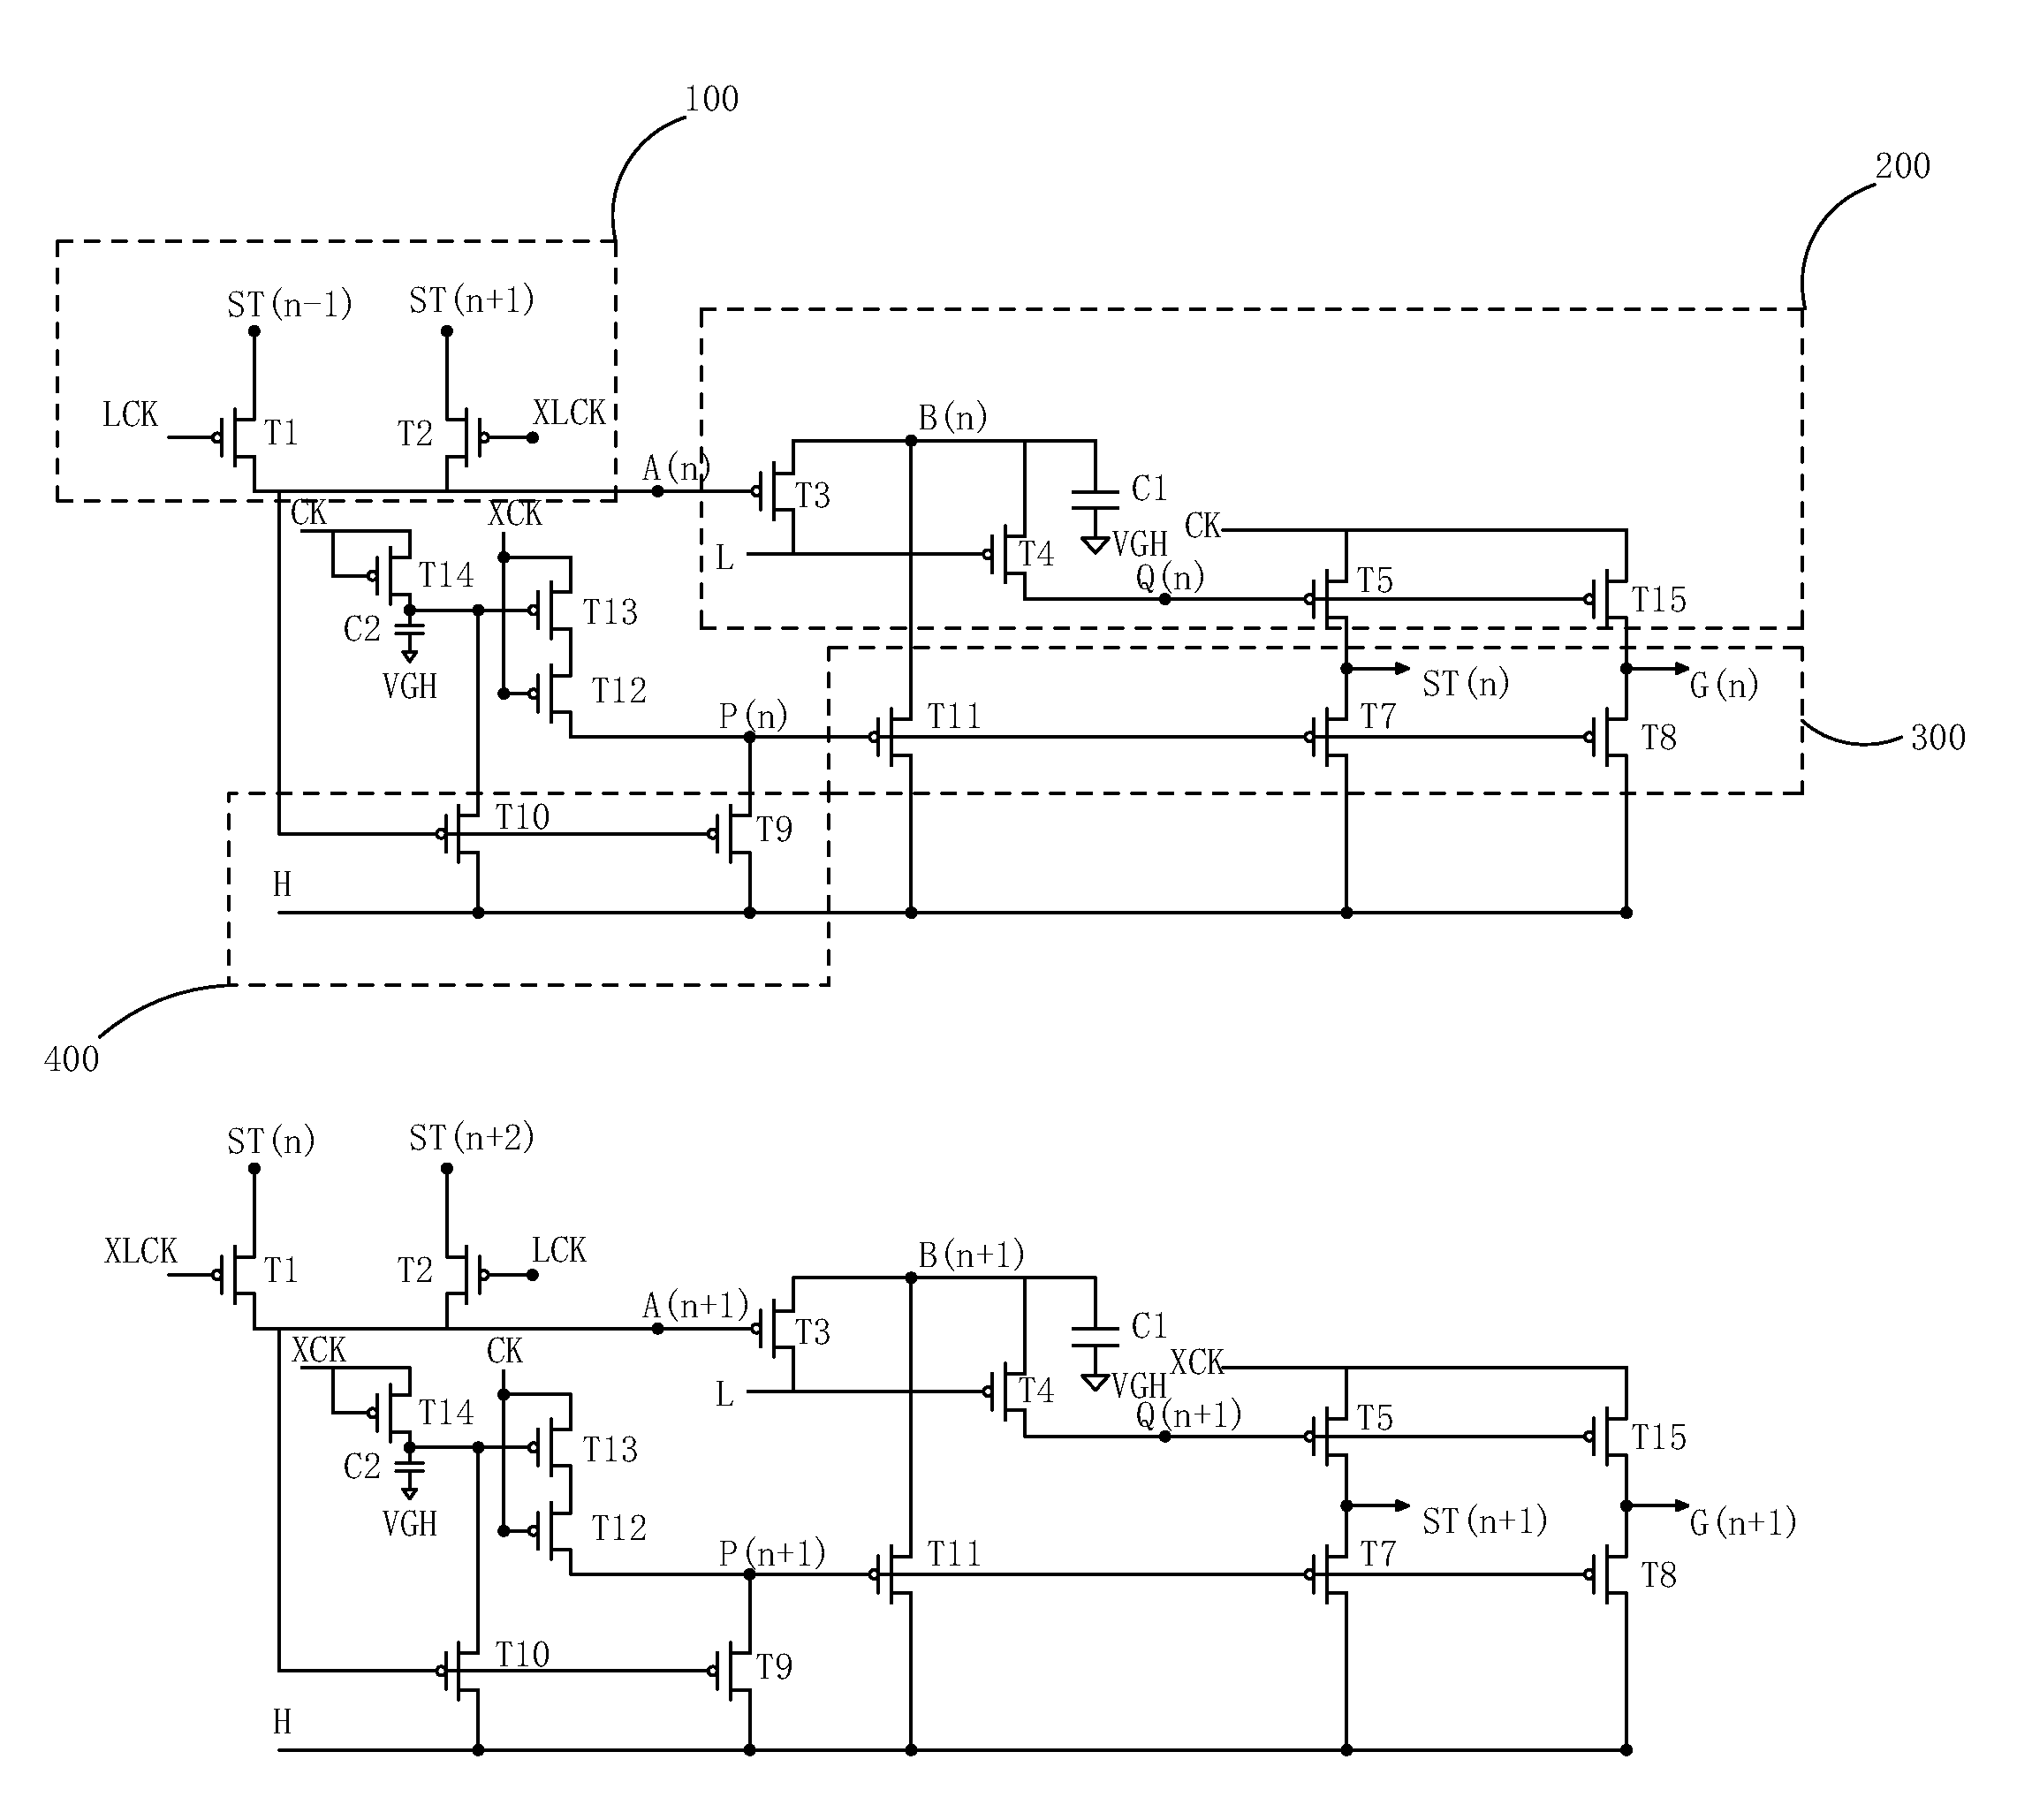 GOA circuit based on p-type thin film transistor